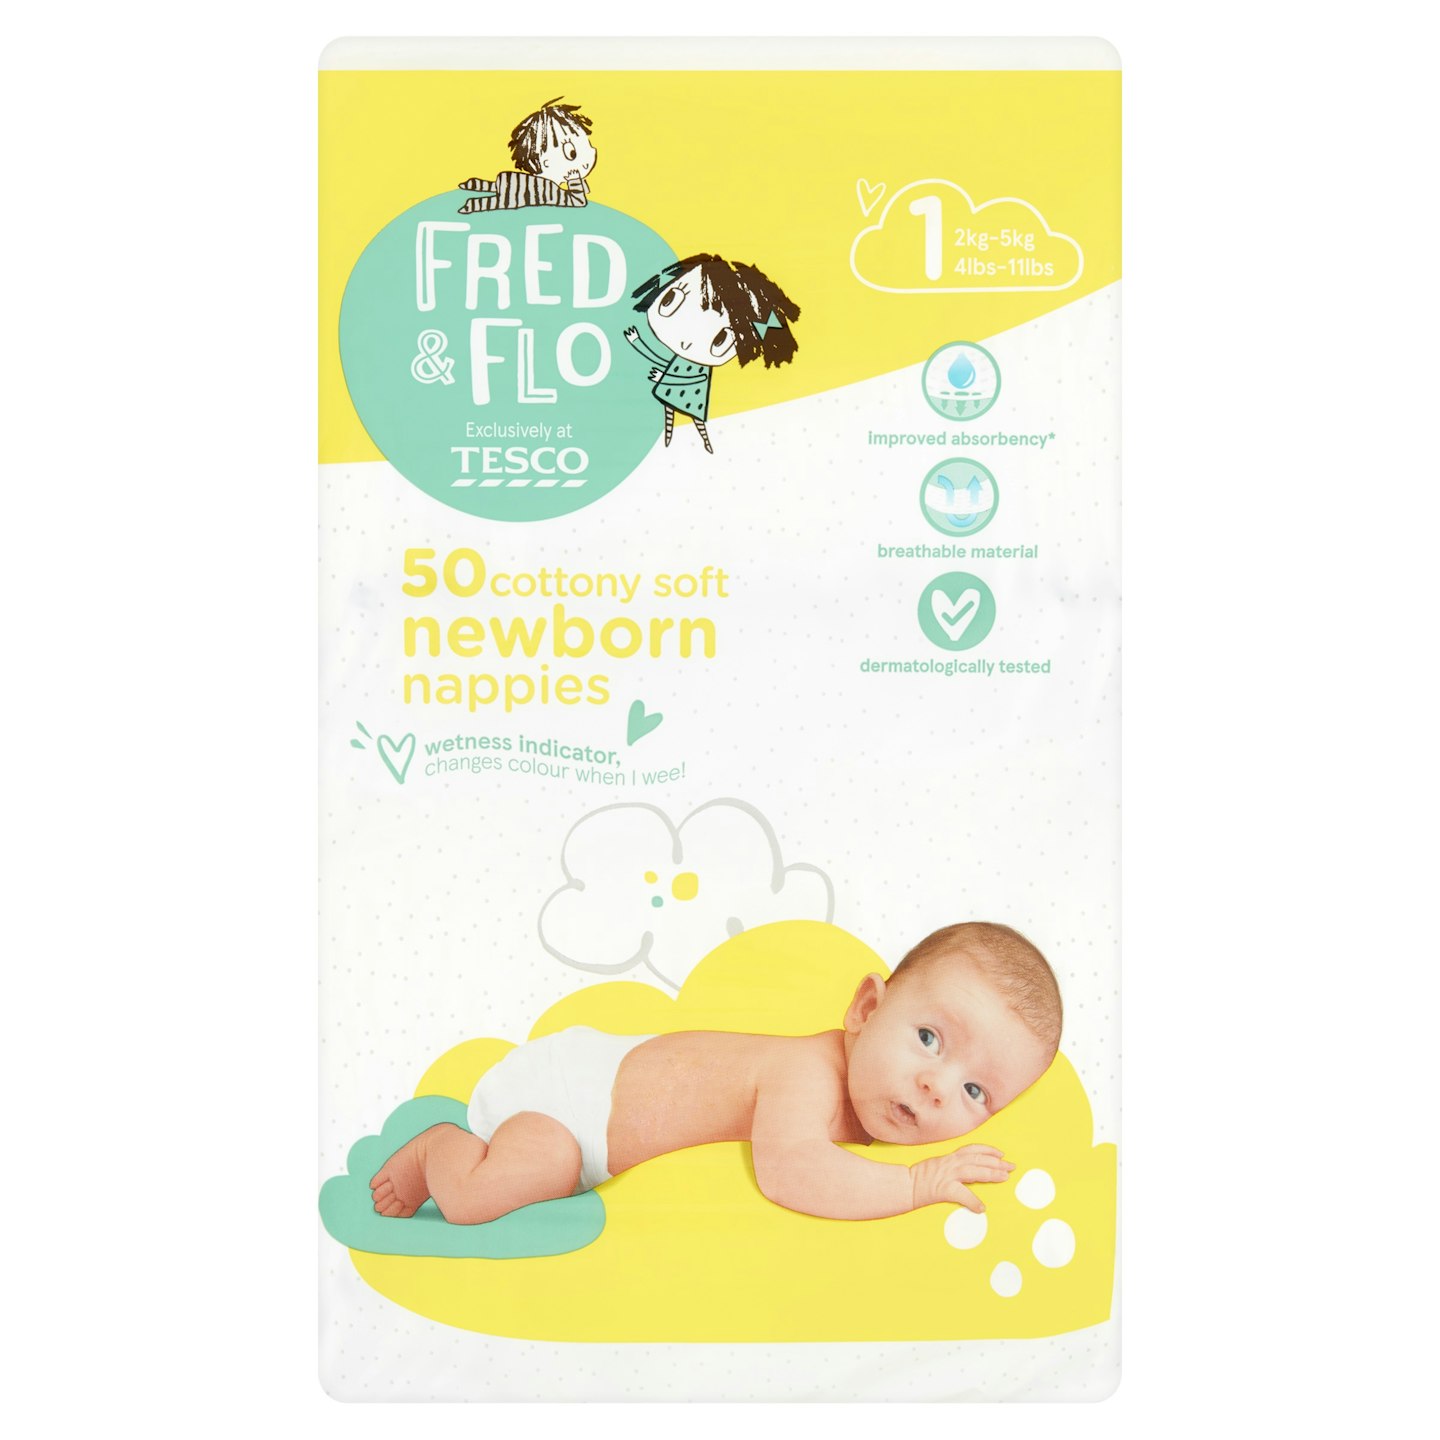 Tesco Fred & Flo Newborn Nappies, Reviews